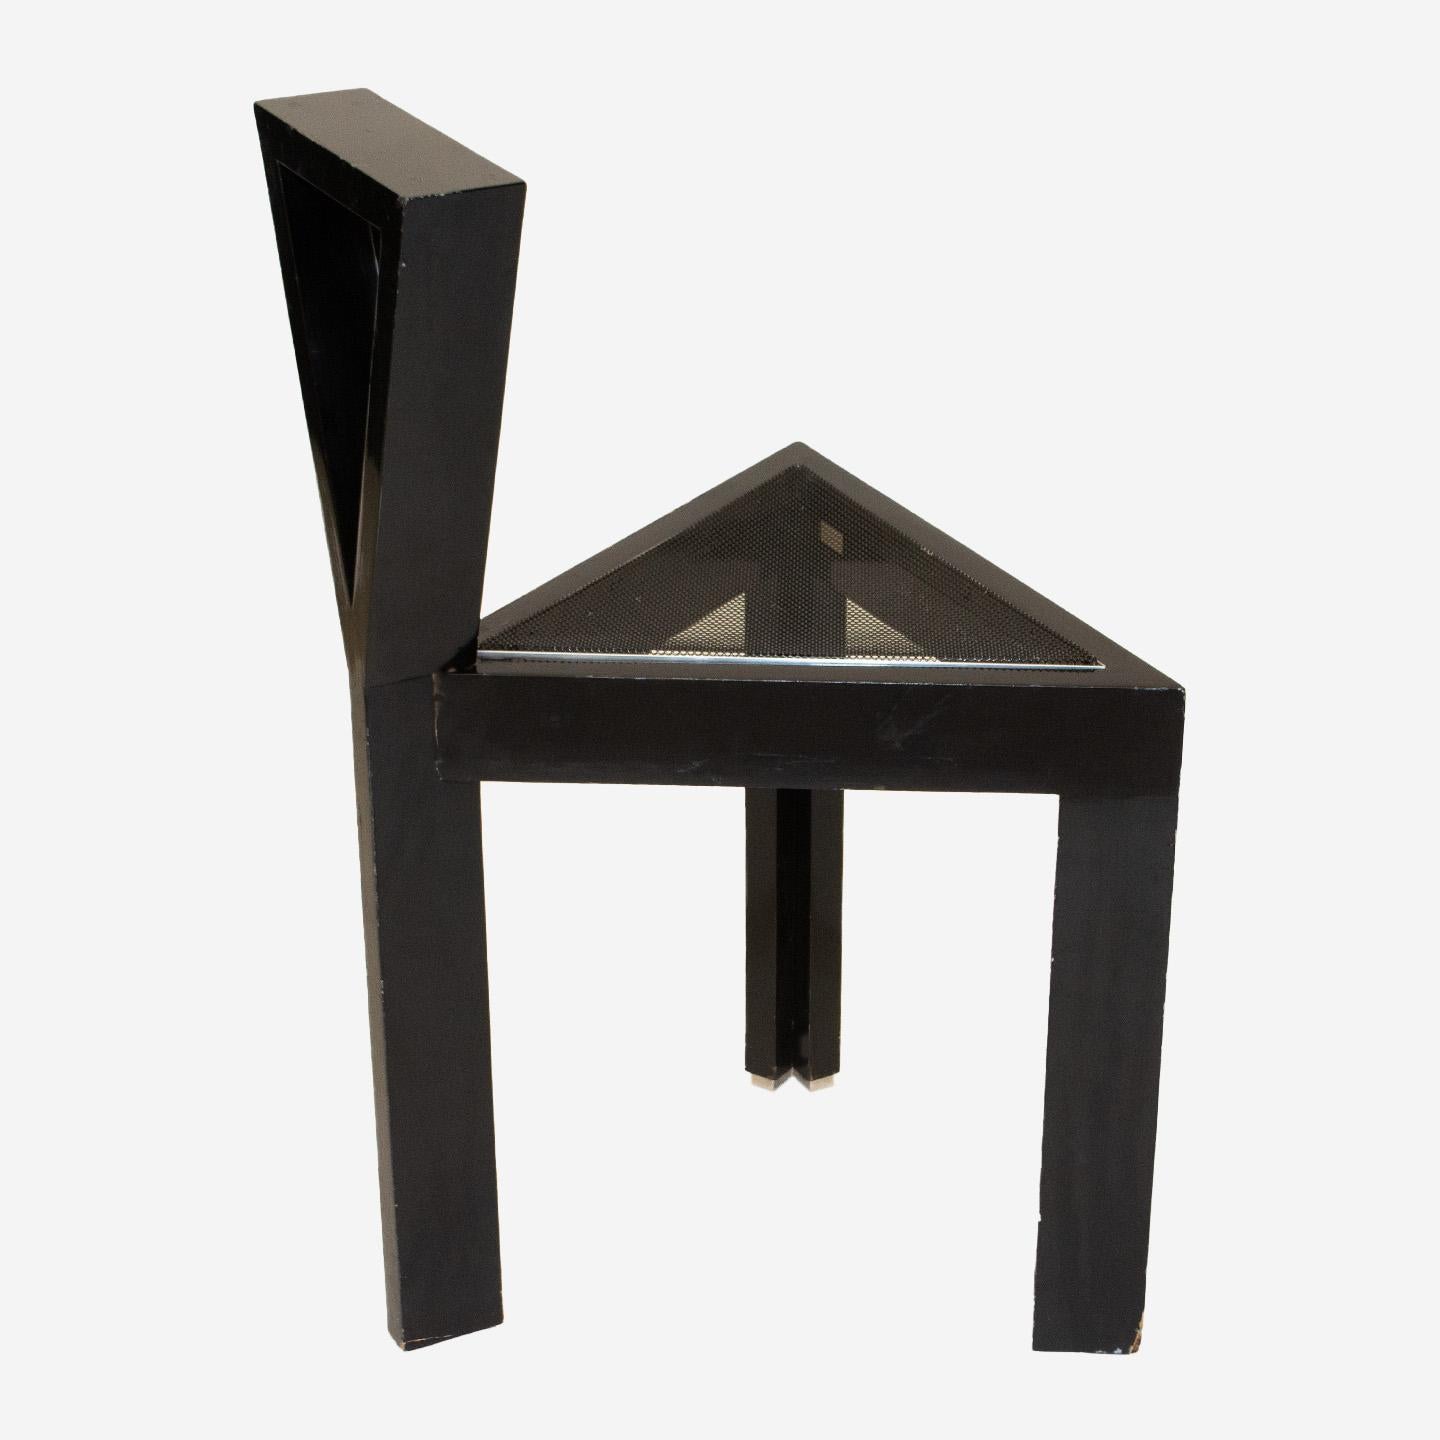 Post-Modern Memphis Style Modernist Triangular Chair by Carl Tese For Sale